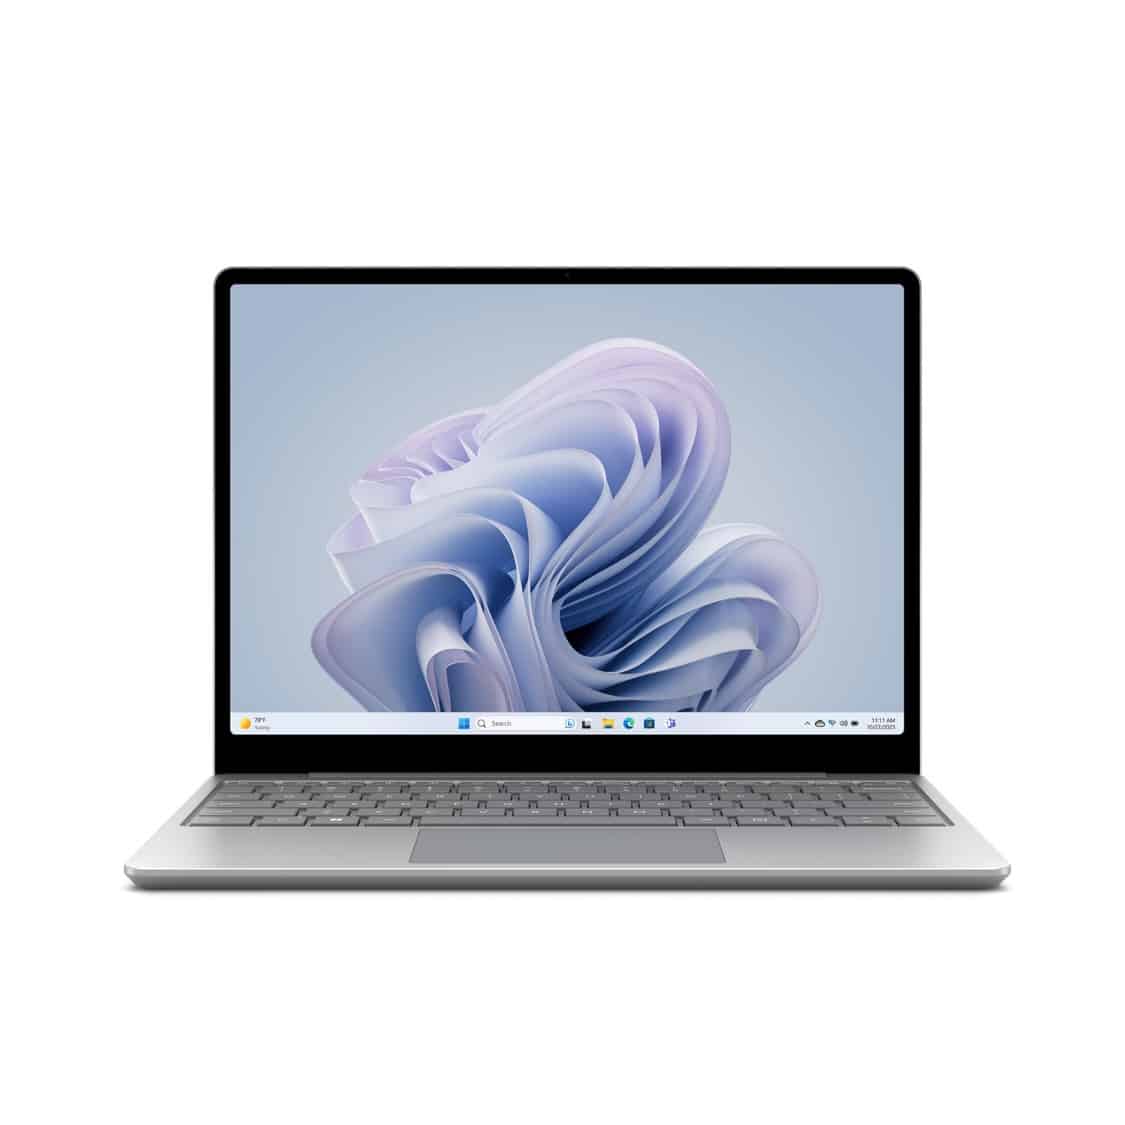 M365超值組】Microsoft 微軟Surface Laptop Go 3 (i5/16G/256G) 兩色選